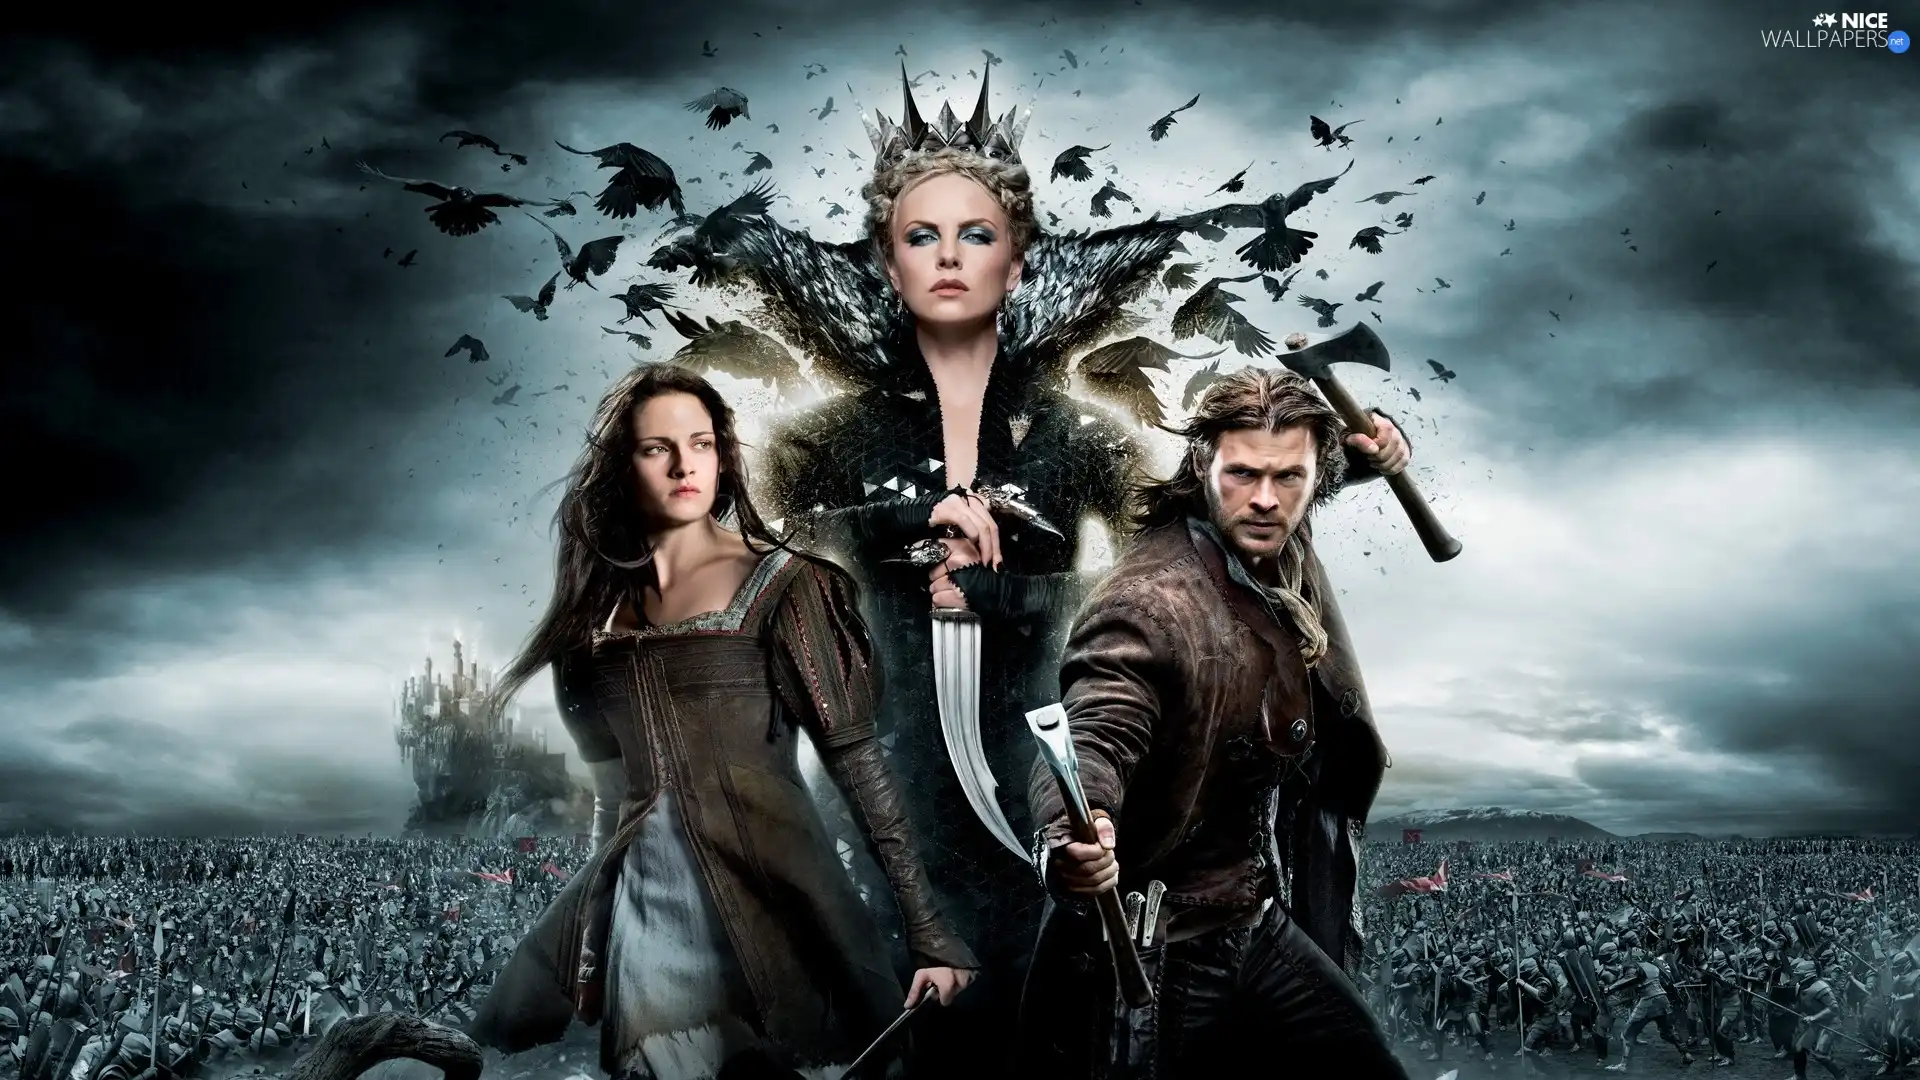 Snow White and the Huntsman, Kristen Stewart, Chris Hemsworth, Charlize Theron